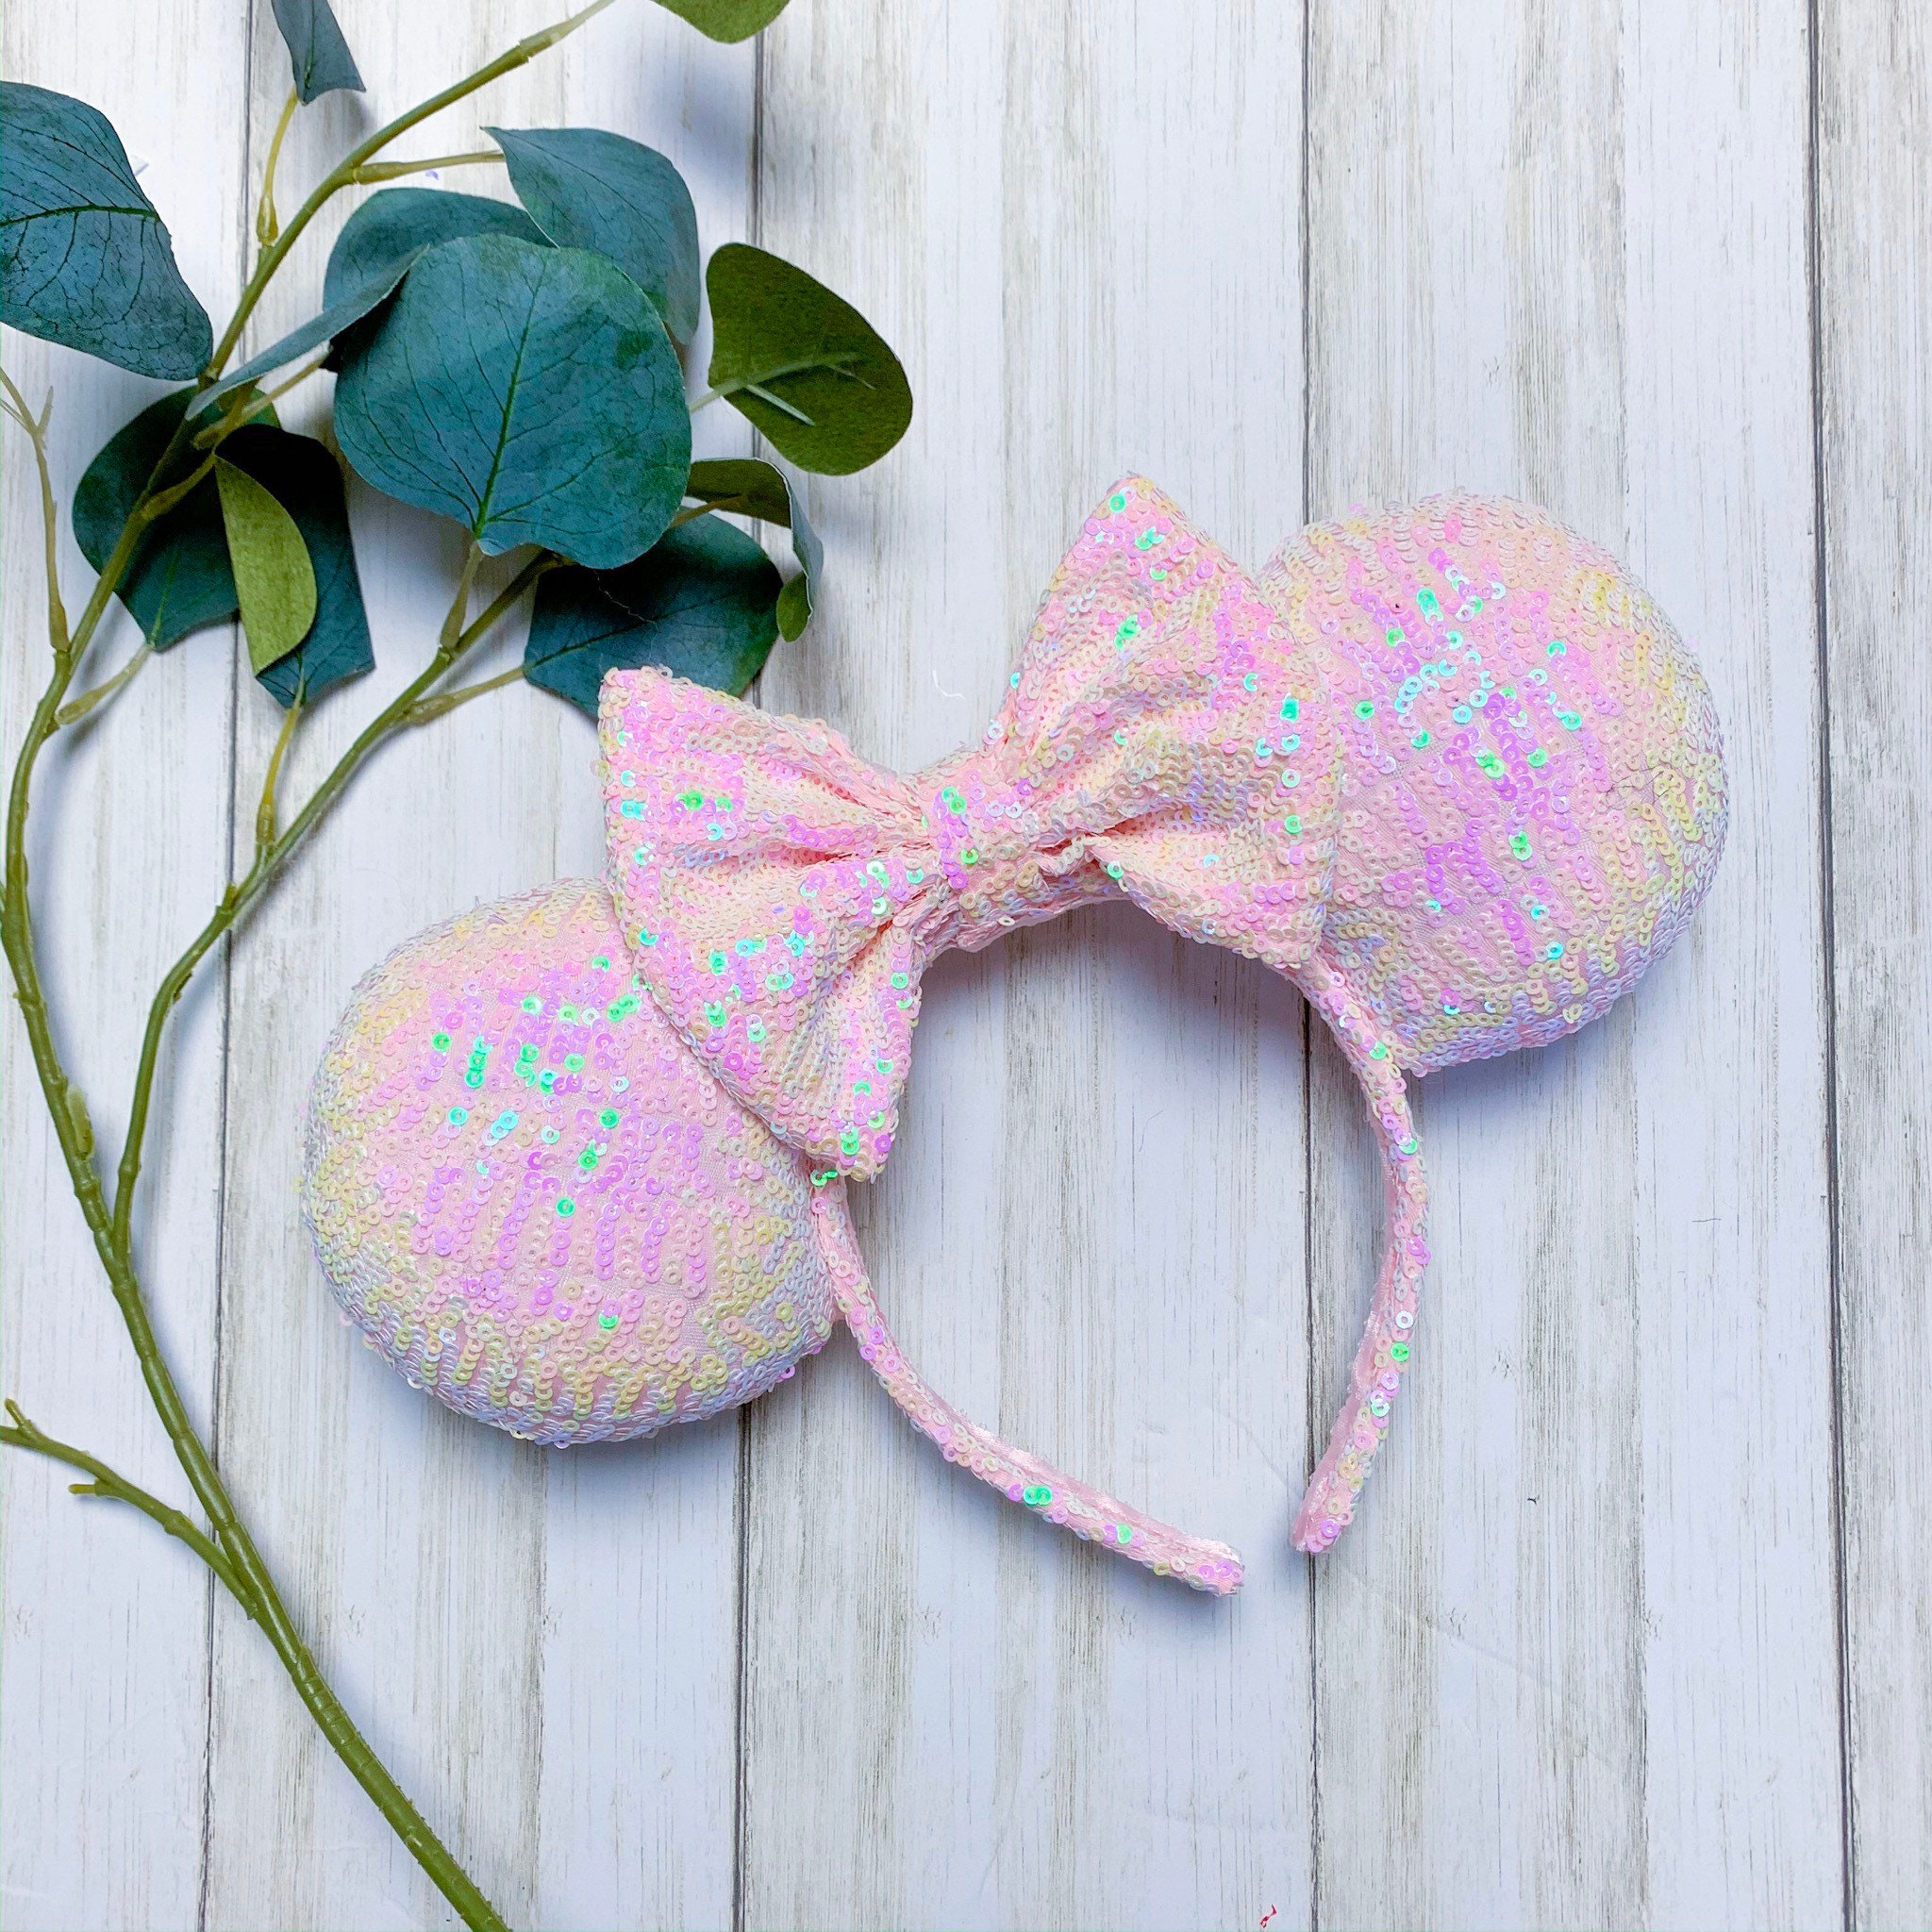 Disney Millennial Pink Mouse Ears and Spirit Jersey